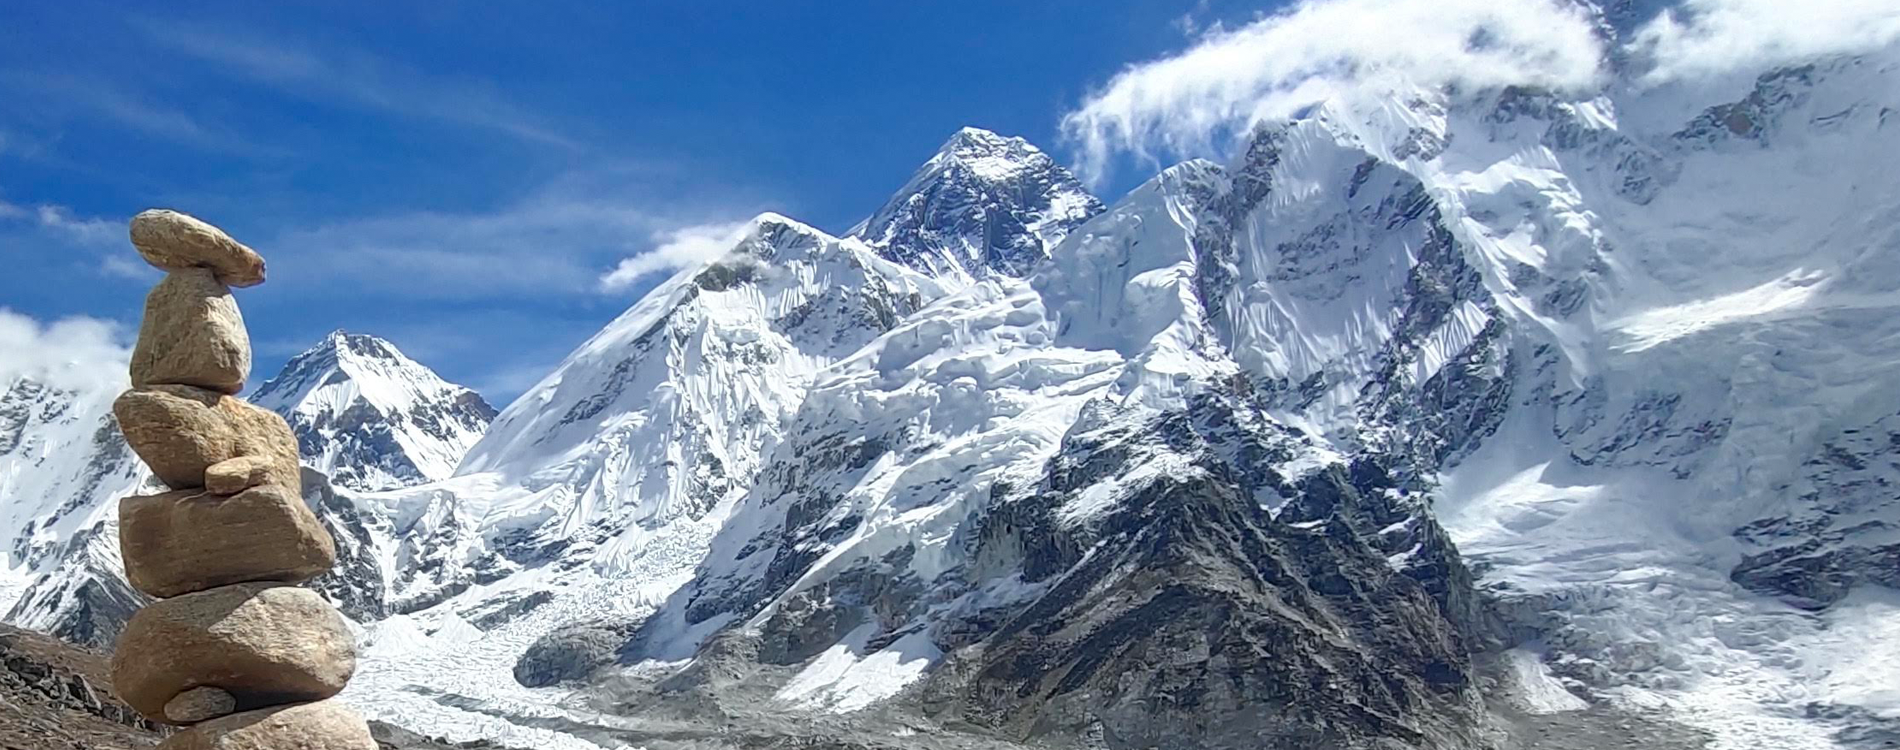 Mt. Everest View - Everest Basecamp Trekking